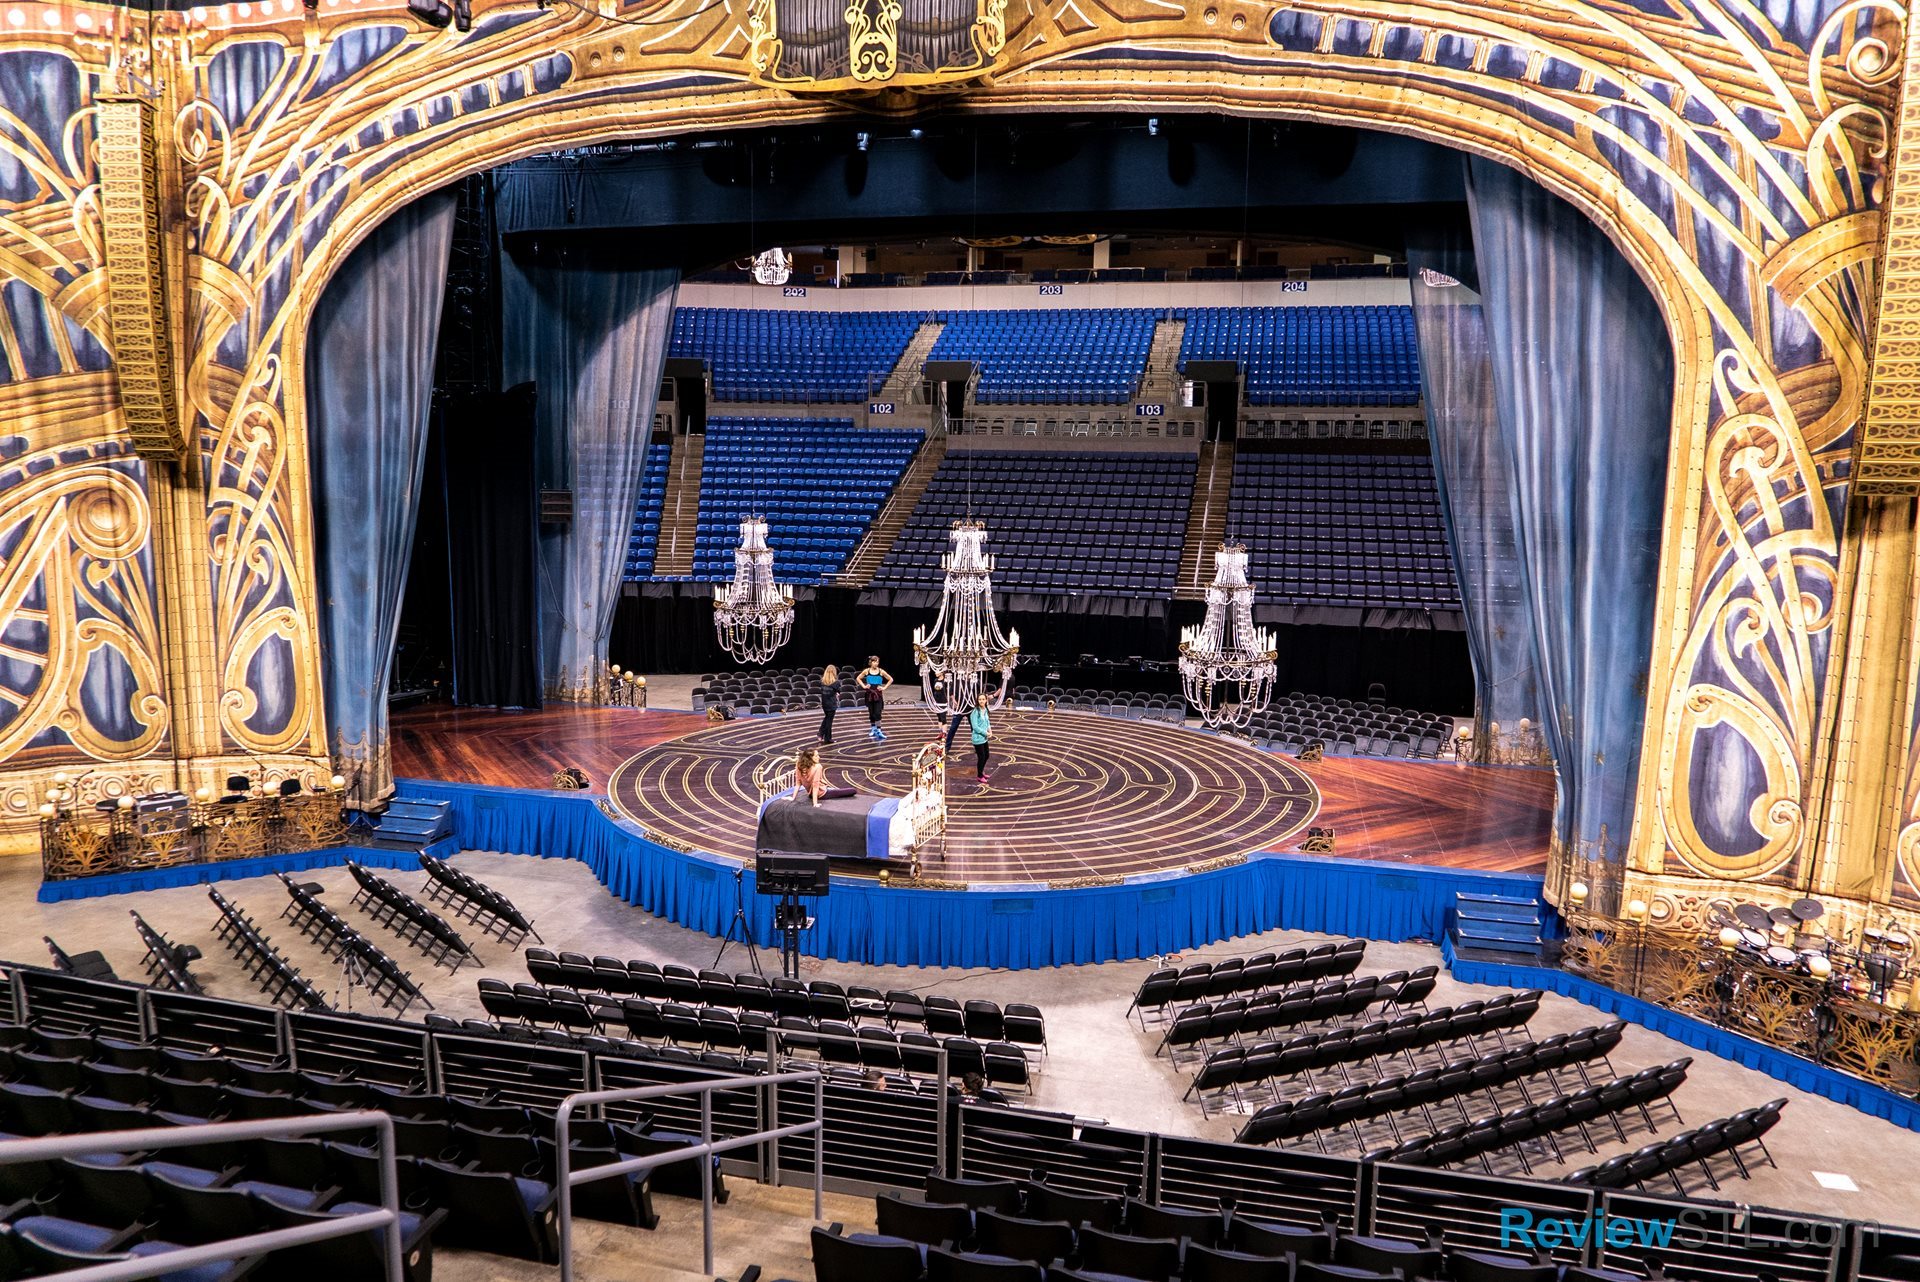 BehindtheScenes at Cirque du Soleil 'Corteo' Through Sunday at